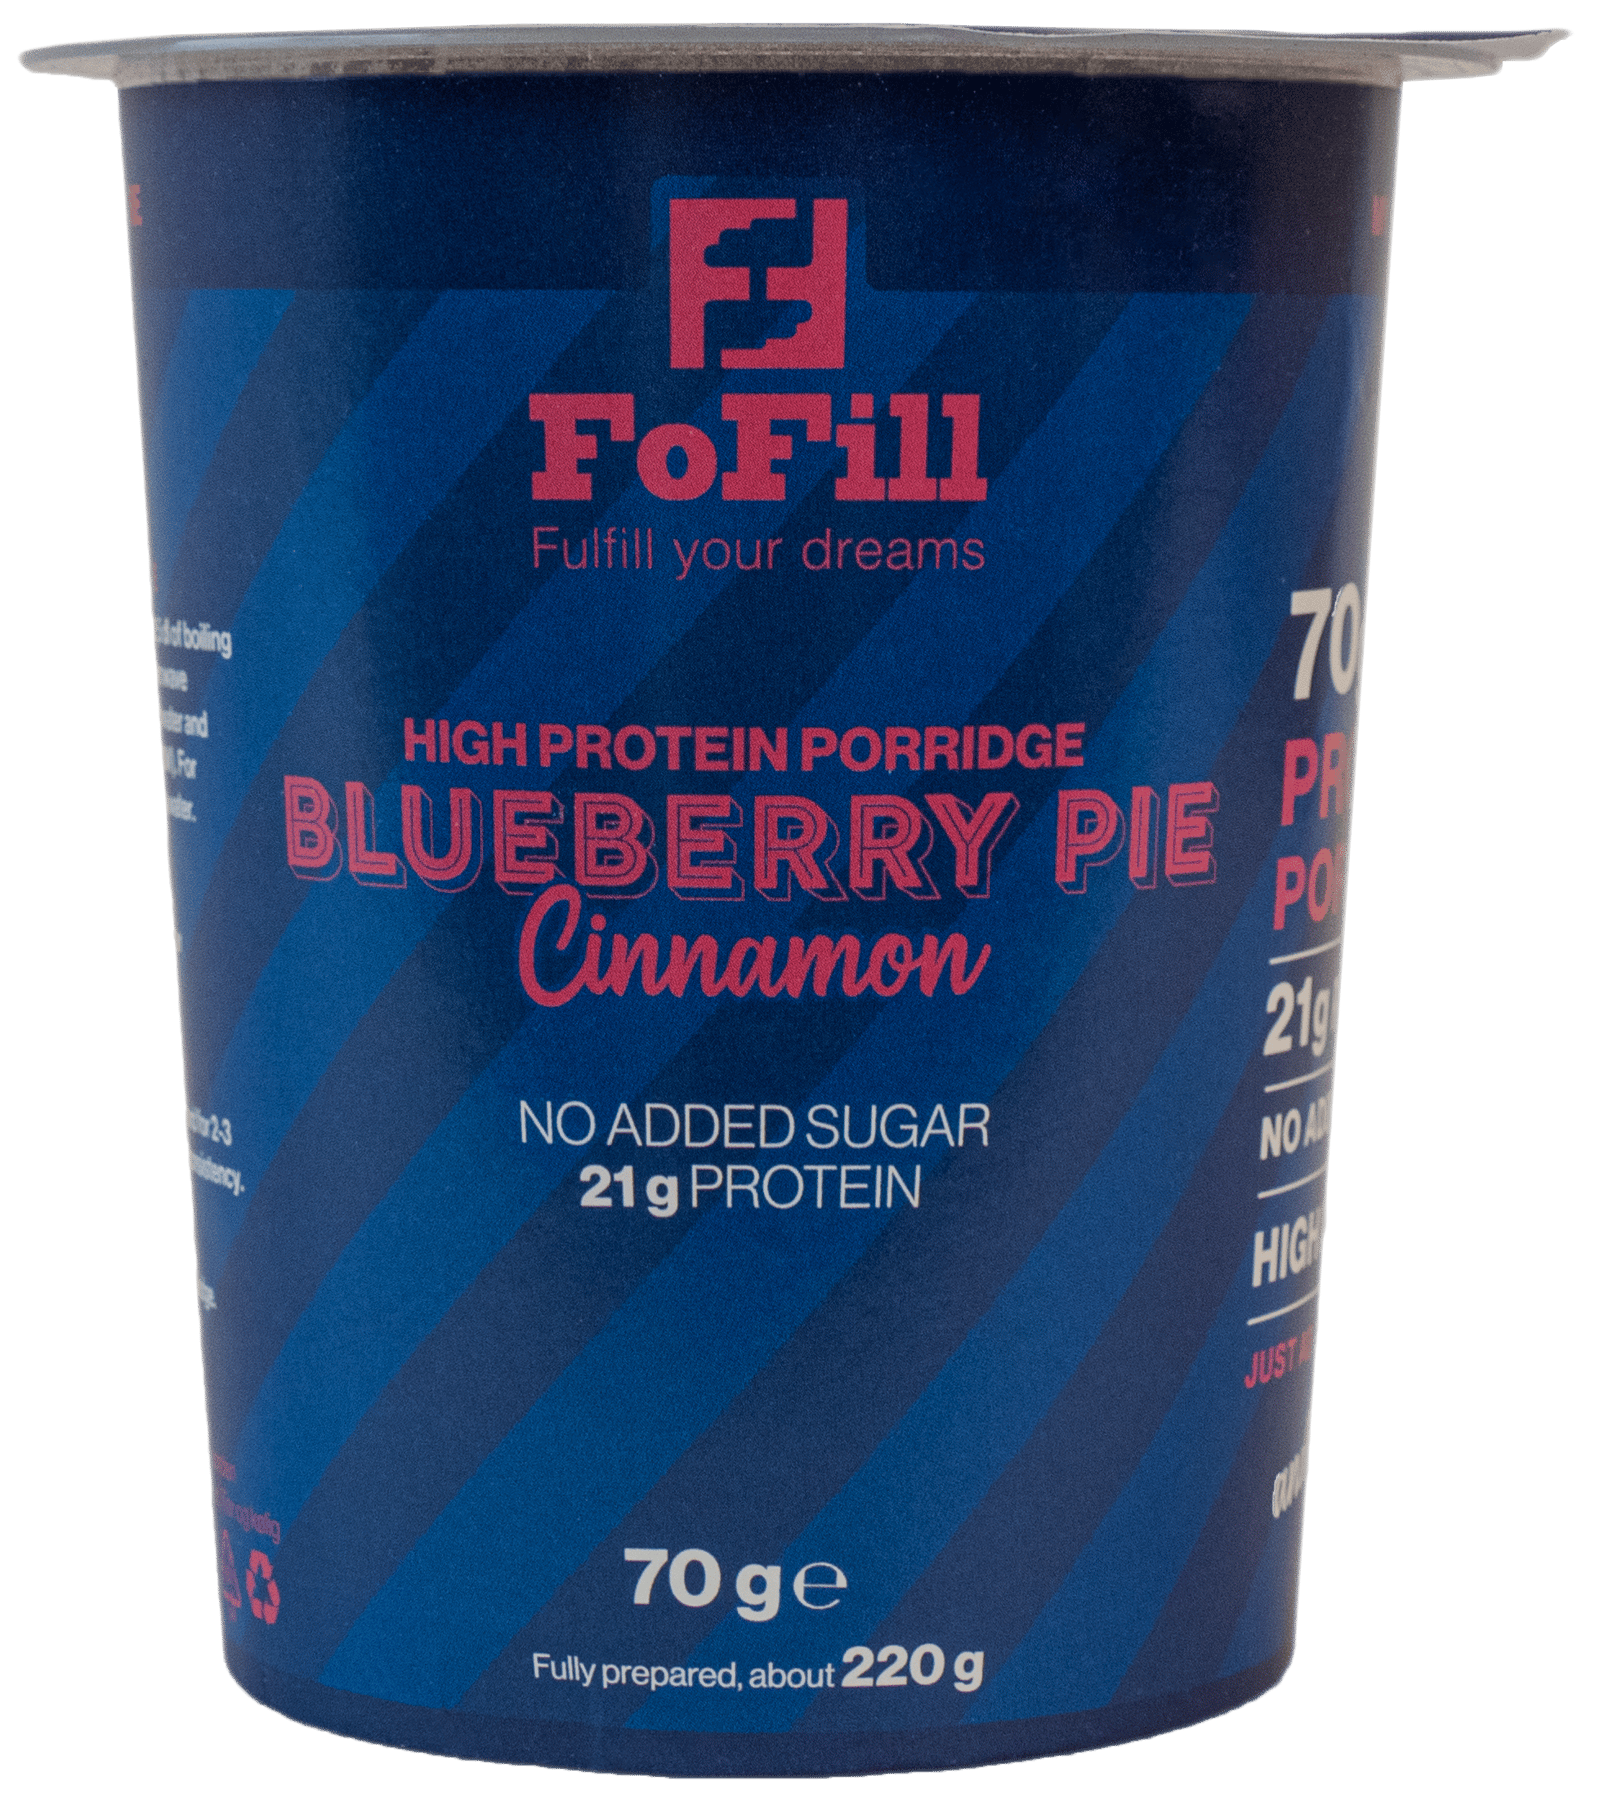 FoFill Blueberry pie Cinnamon Proteingröt 70g